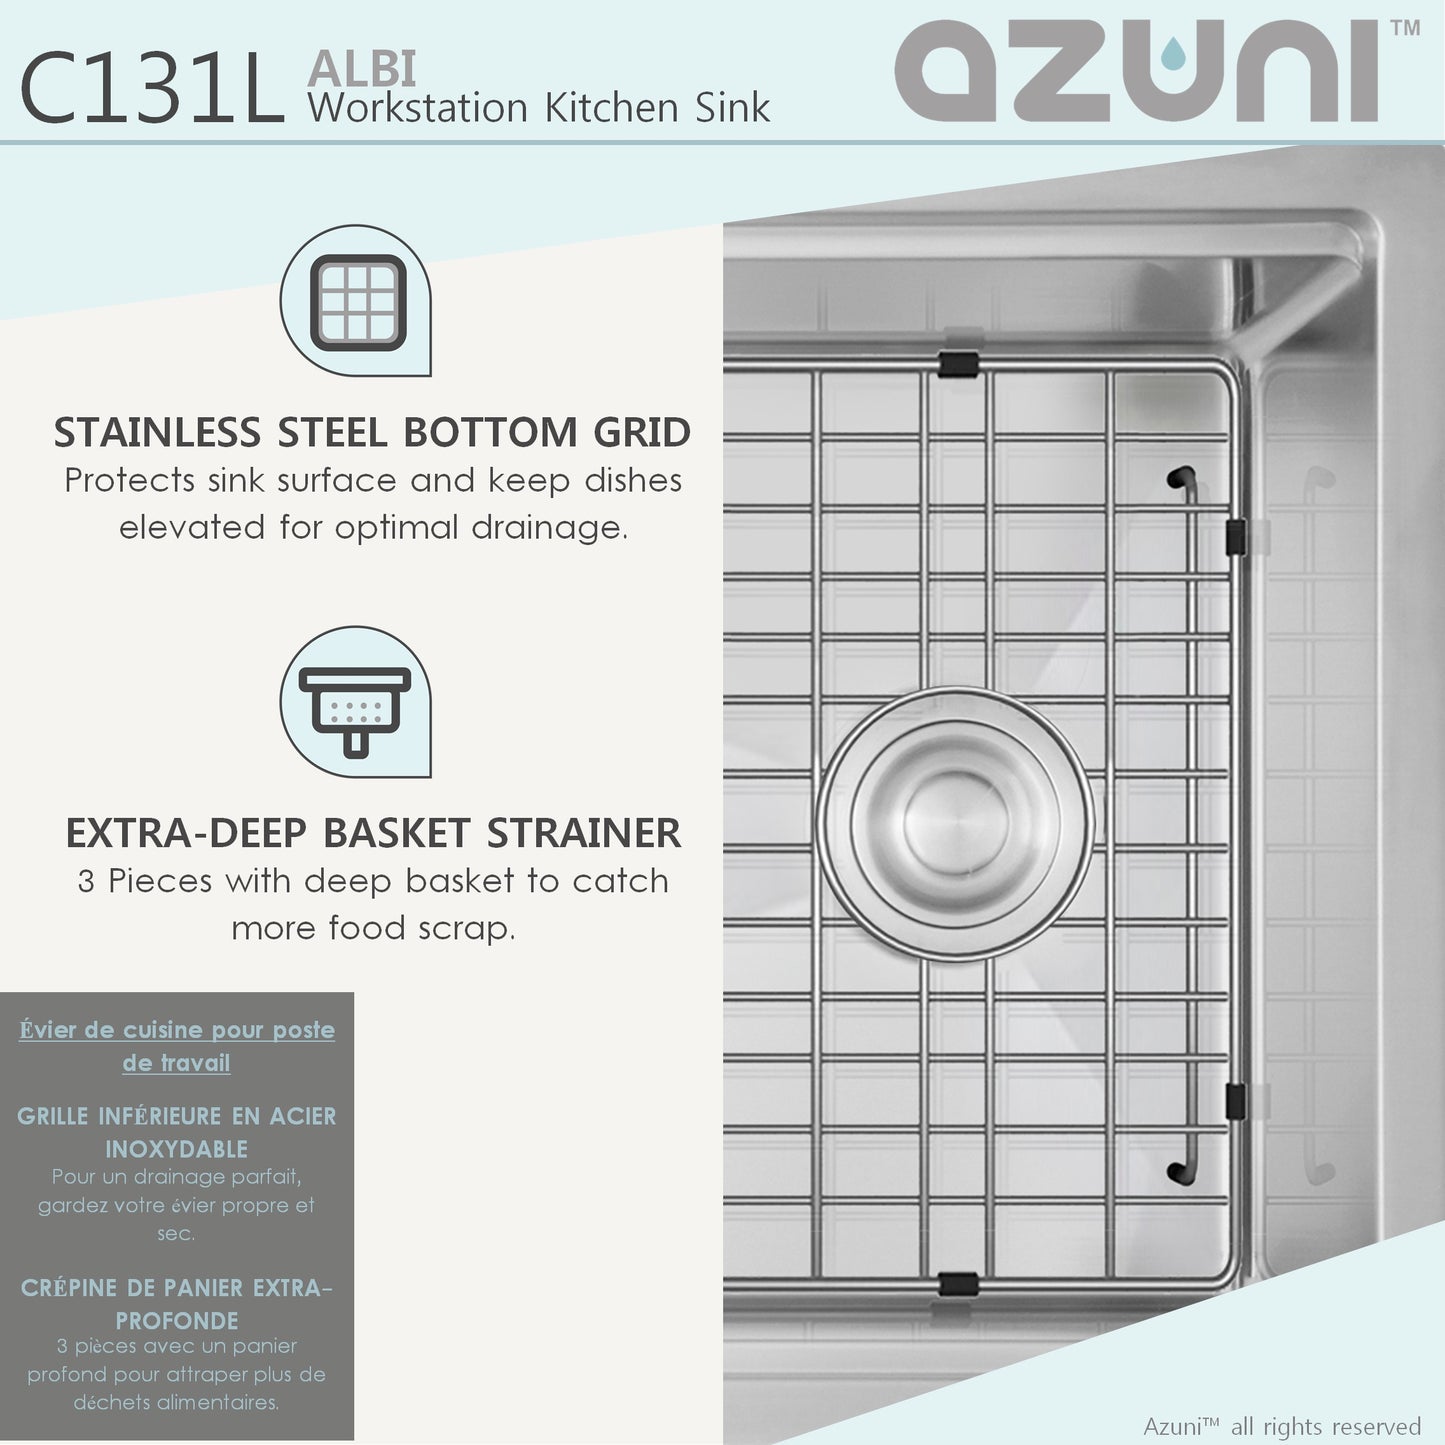 AZUNI 30"L x 19"W Albi Undermount Single Bowl Kitchen Sink Workstation with Accessories Included